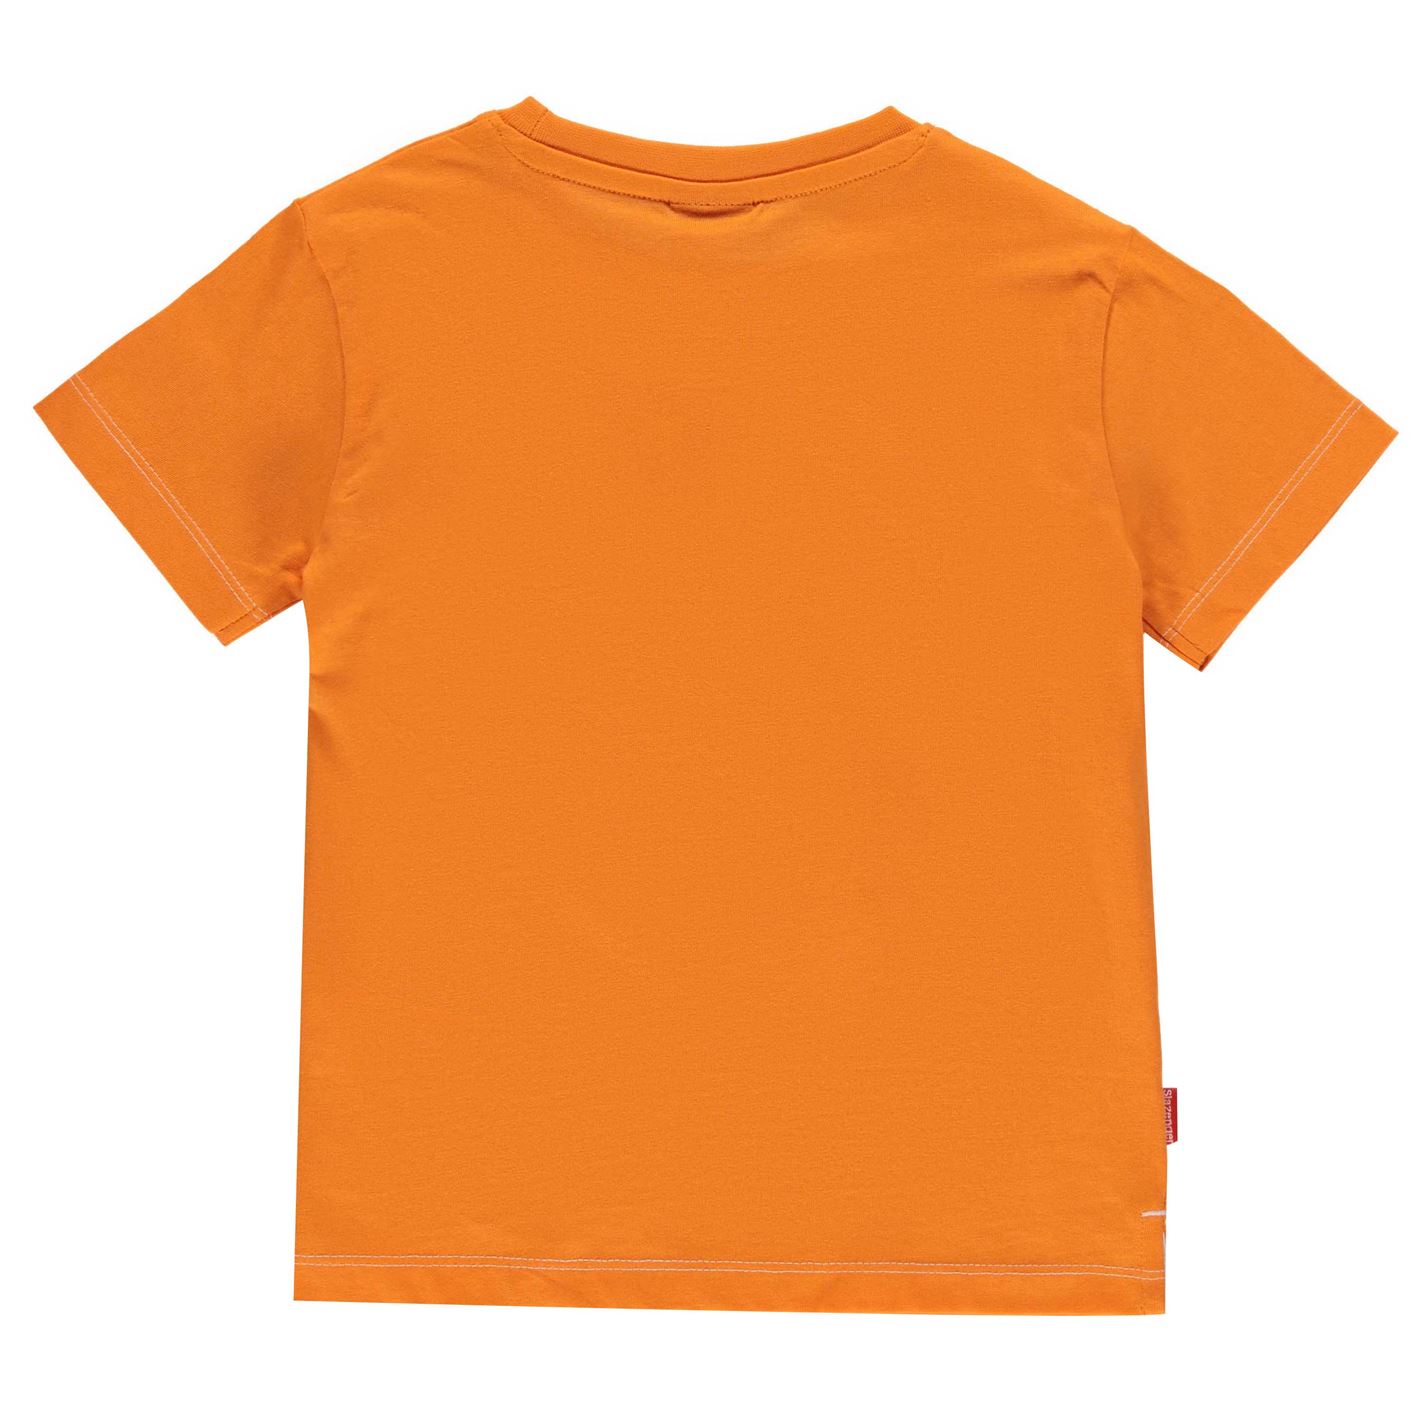 Slazenger Kids Plain T Shirt Tee Top Short Sleeve Casual Crew Neck